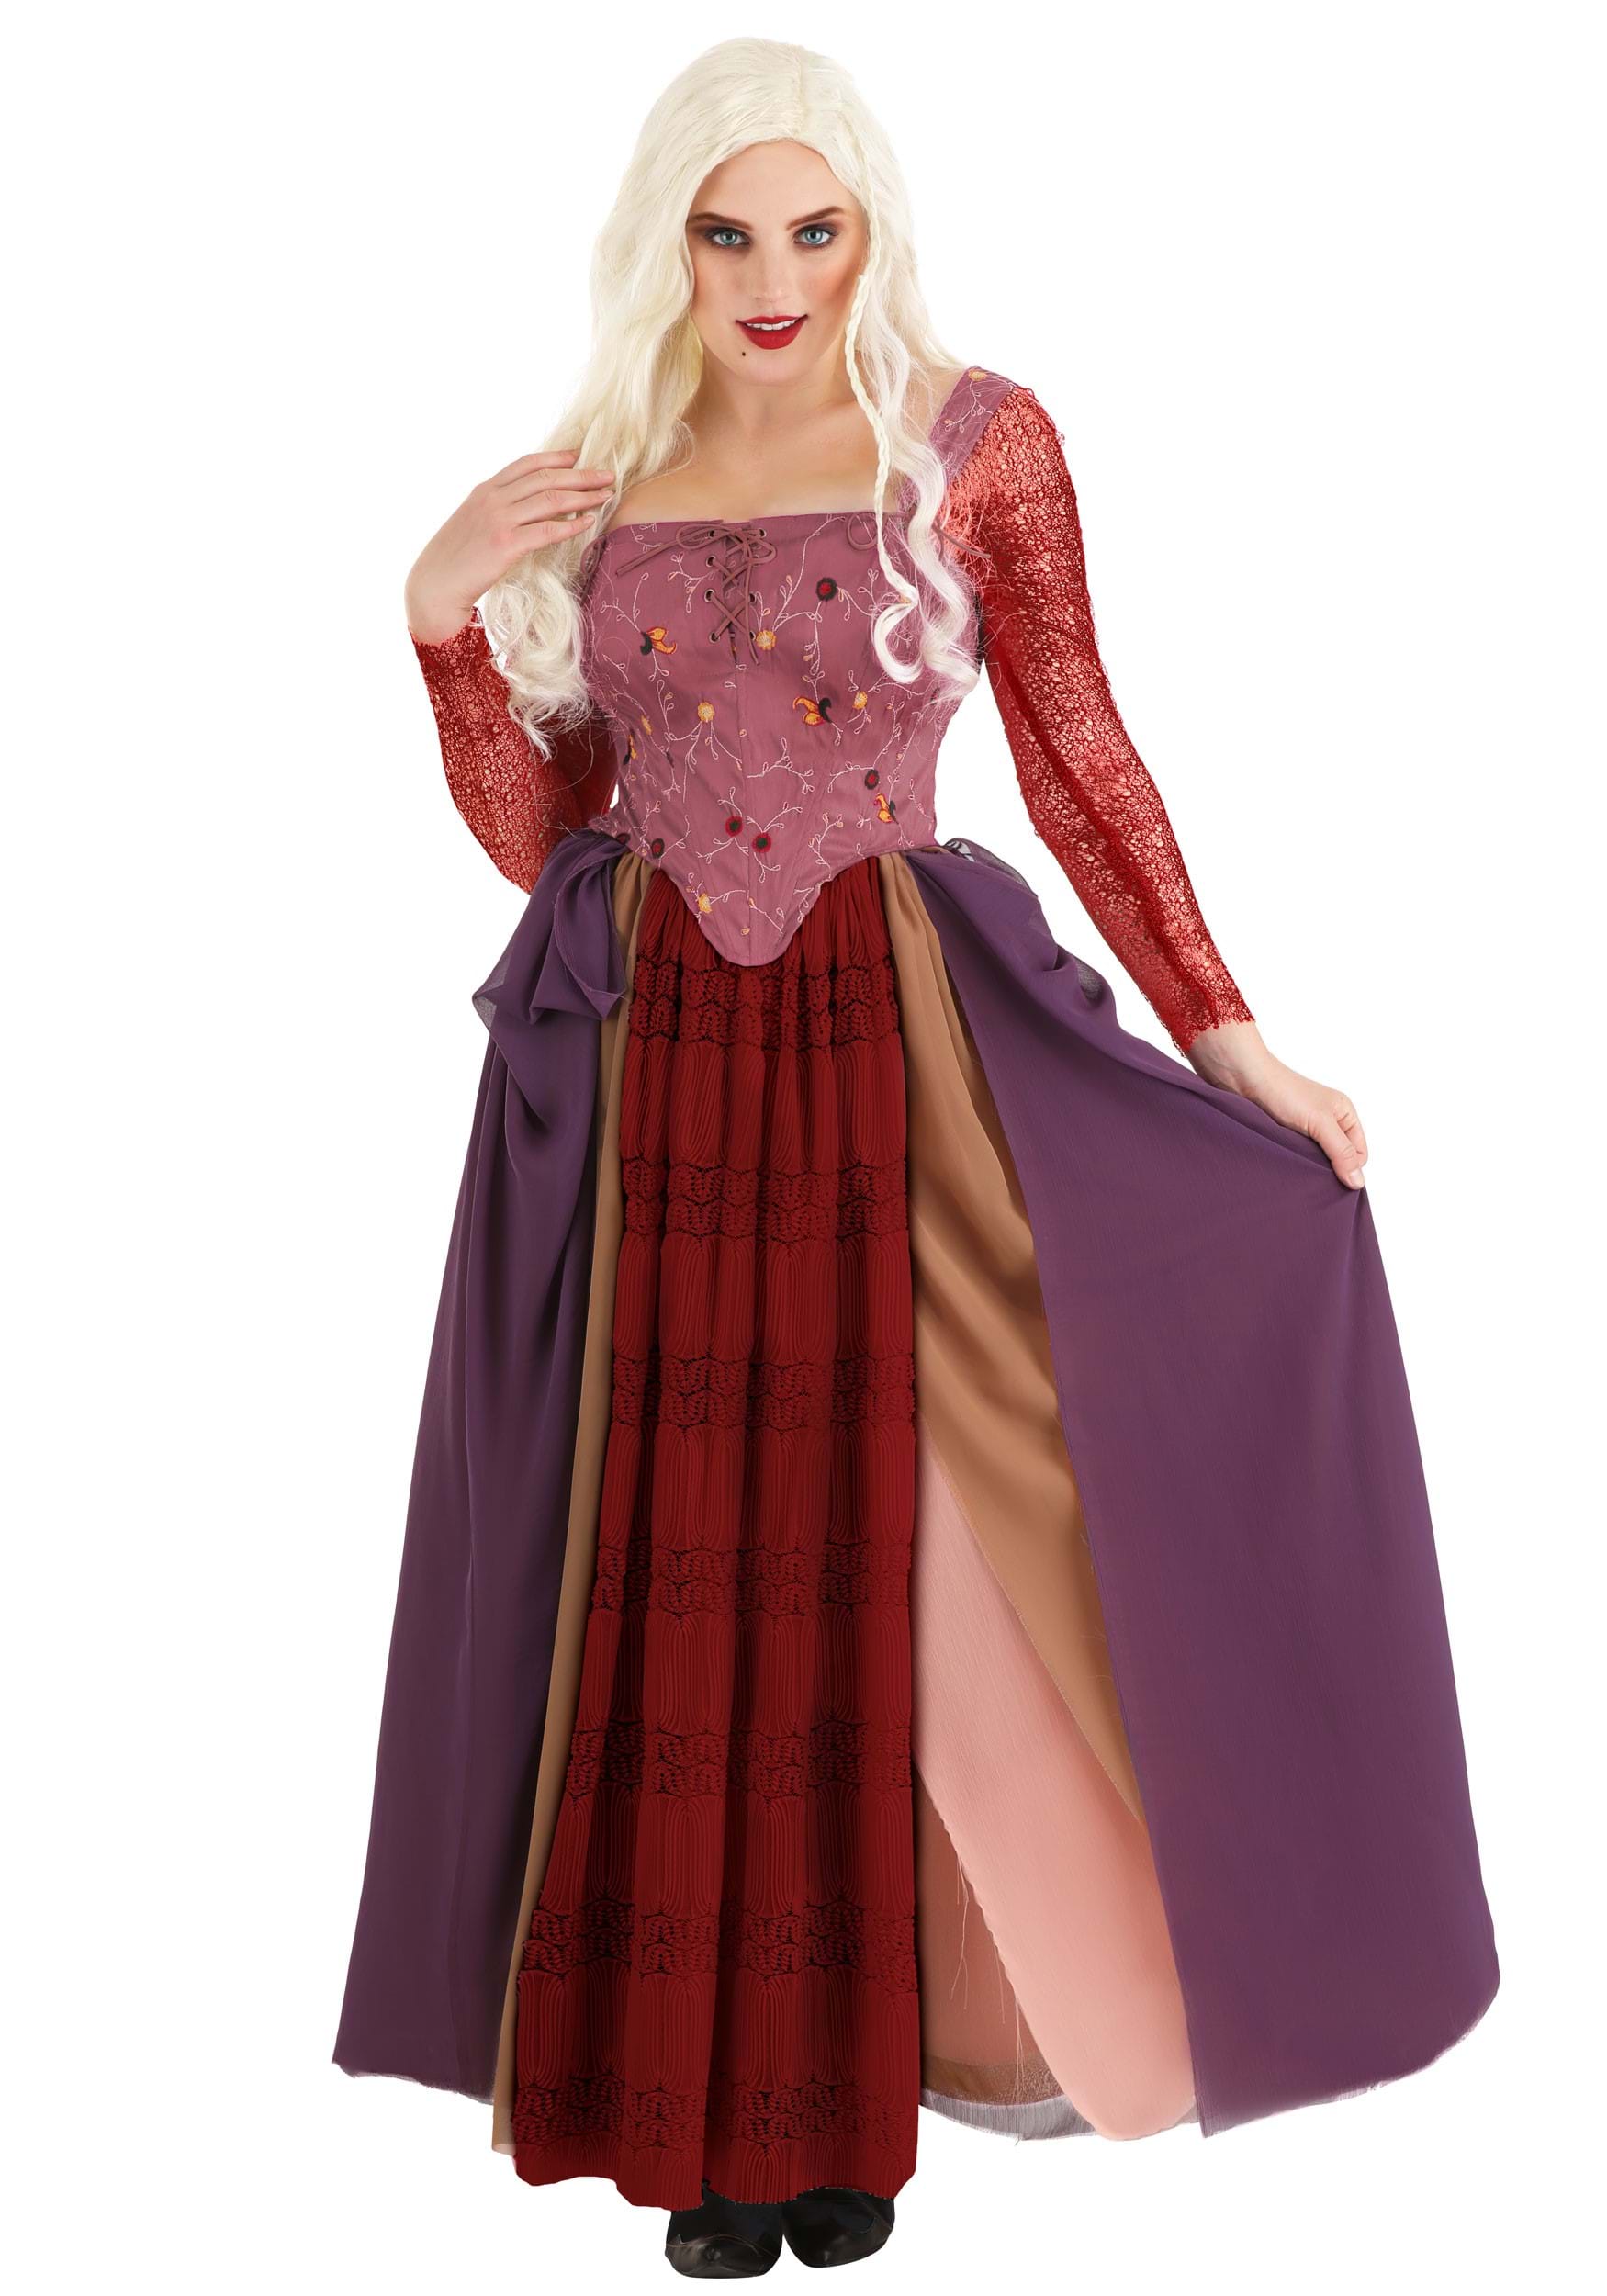 Photos - Fancy Dress Sanderson FUN Costumes Authentic Hocus Pocus Sarah  Costume for Women Pink& 